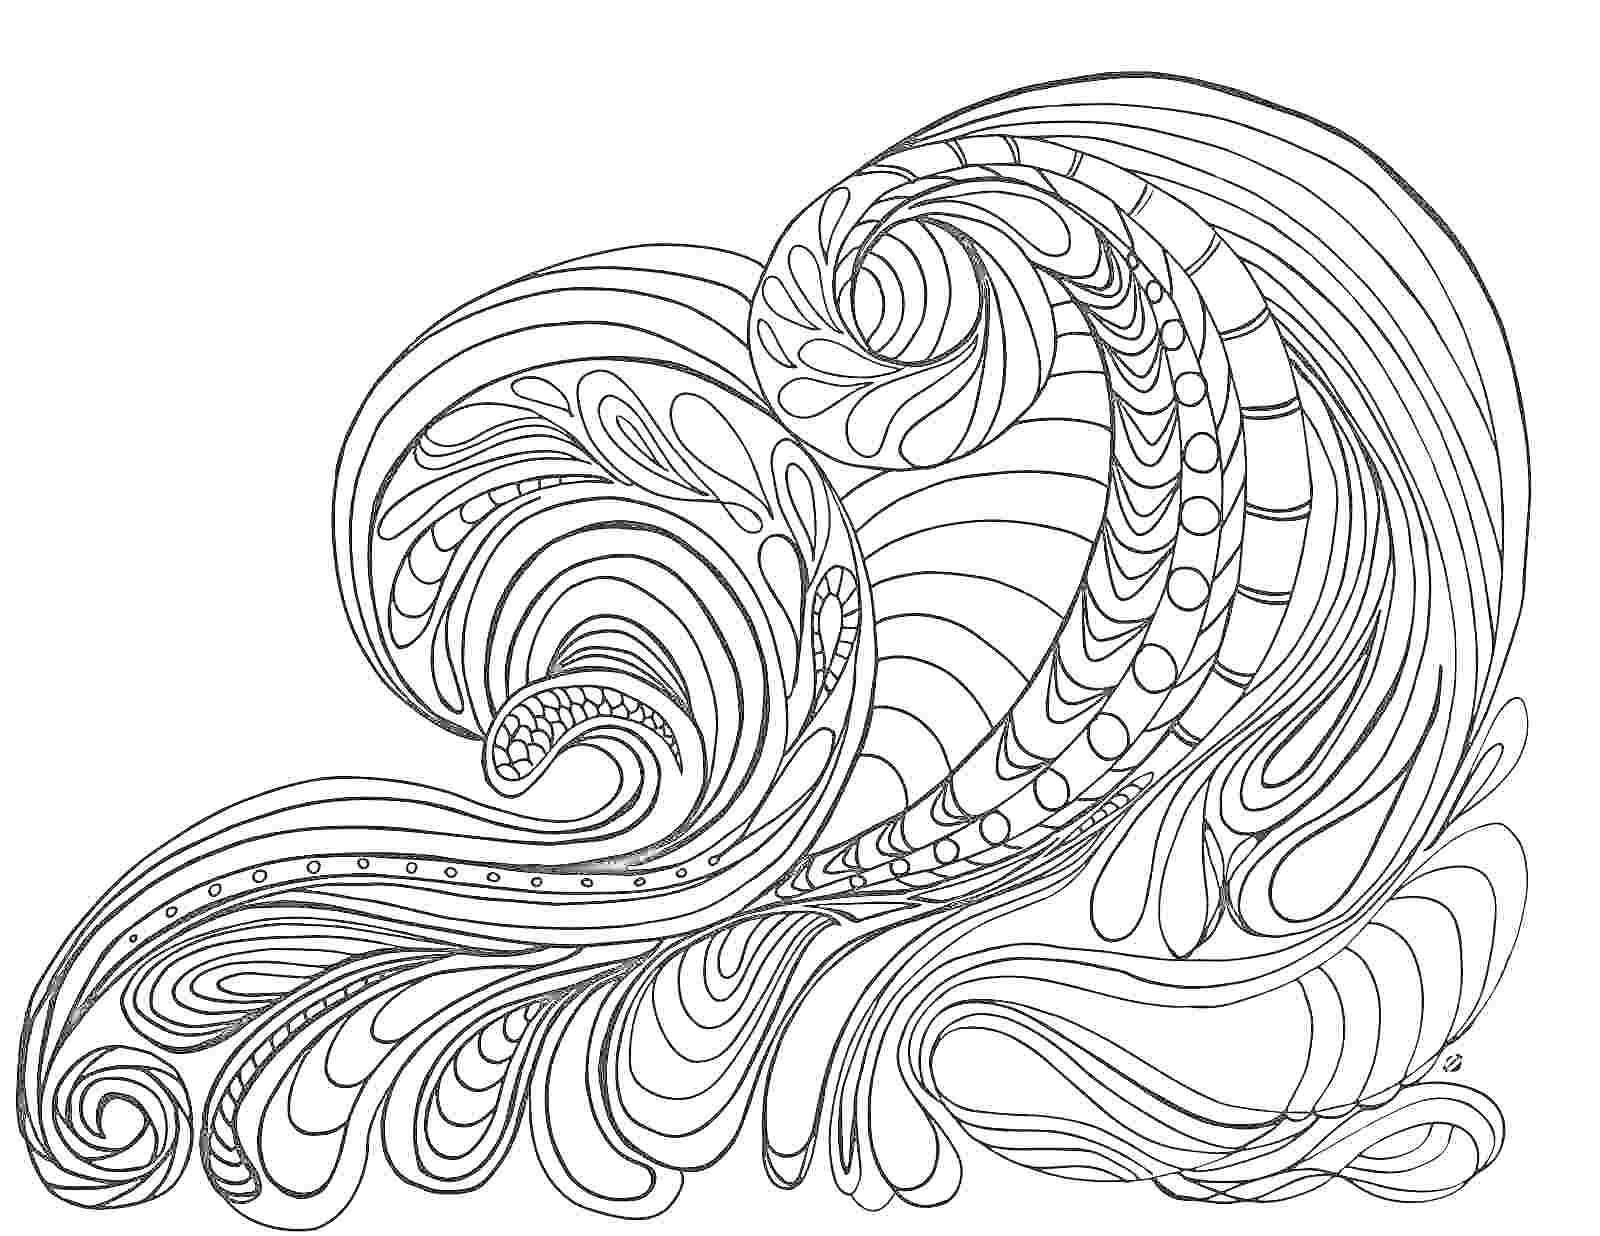 Абстрактная волна с завитками, кругами и линиями